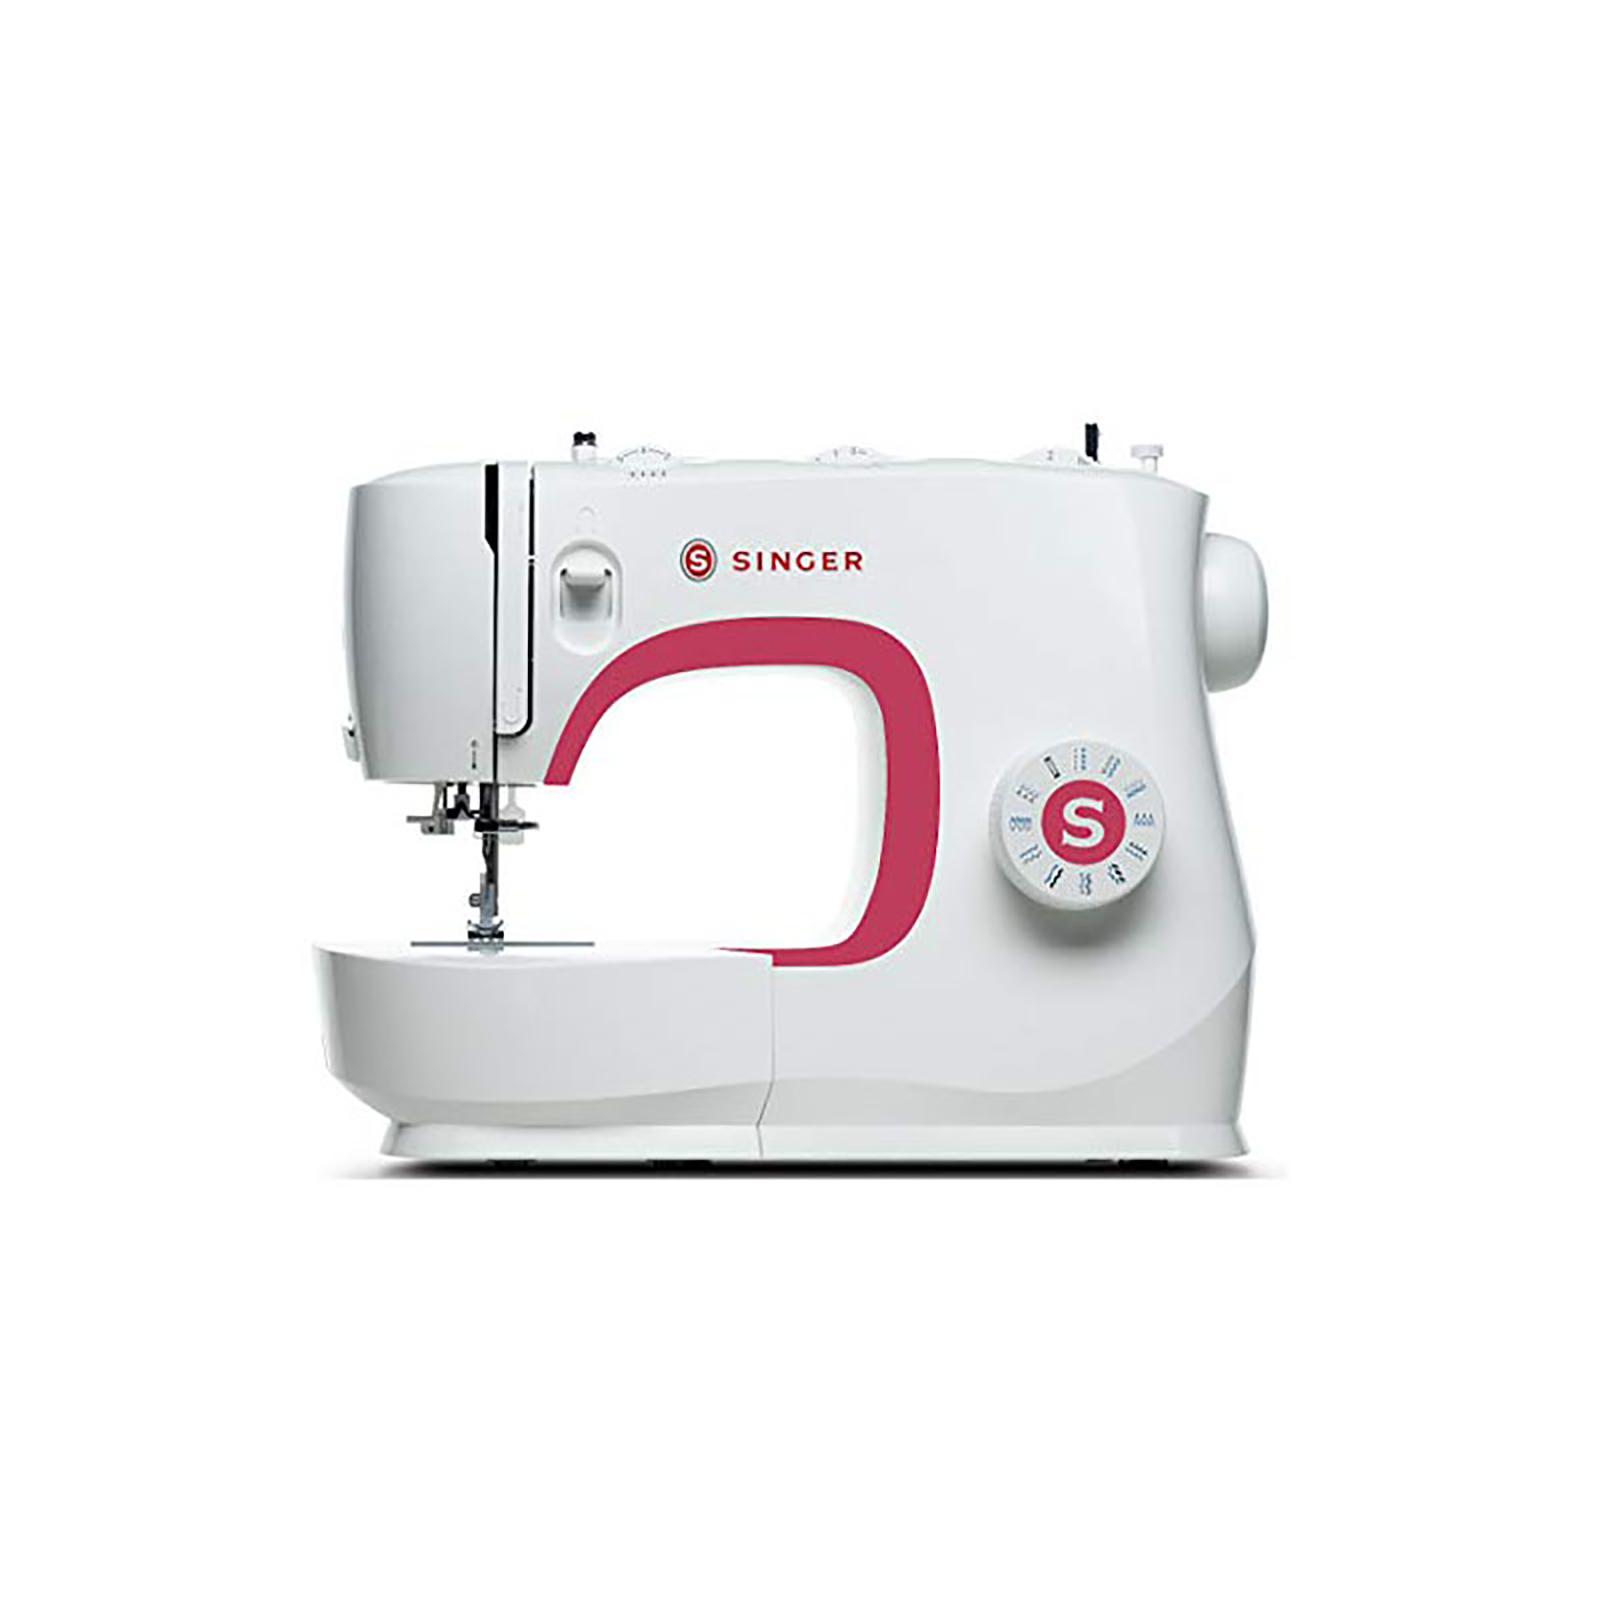 Singer MX231  Sewing Machine - White